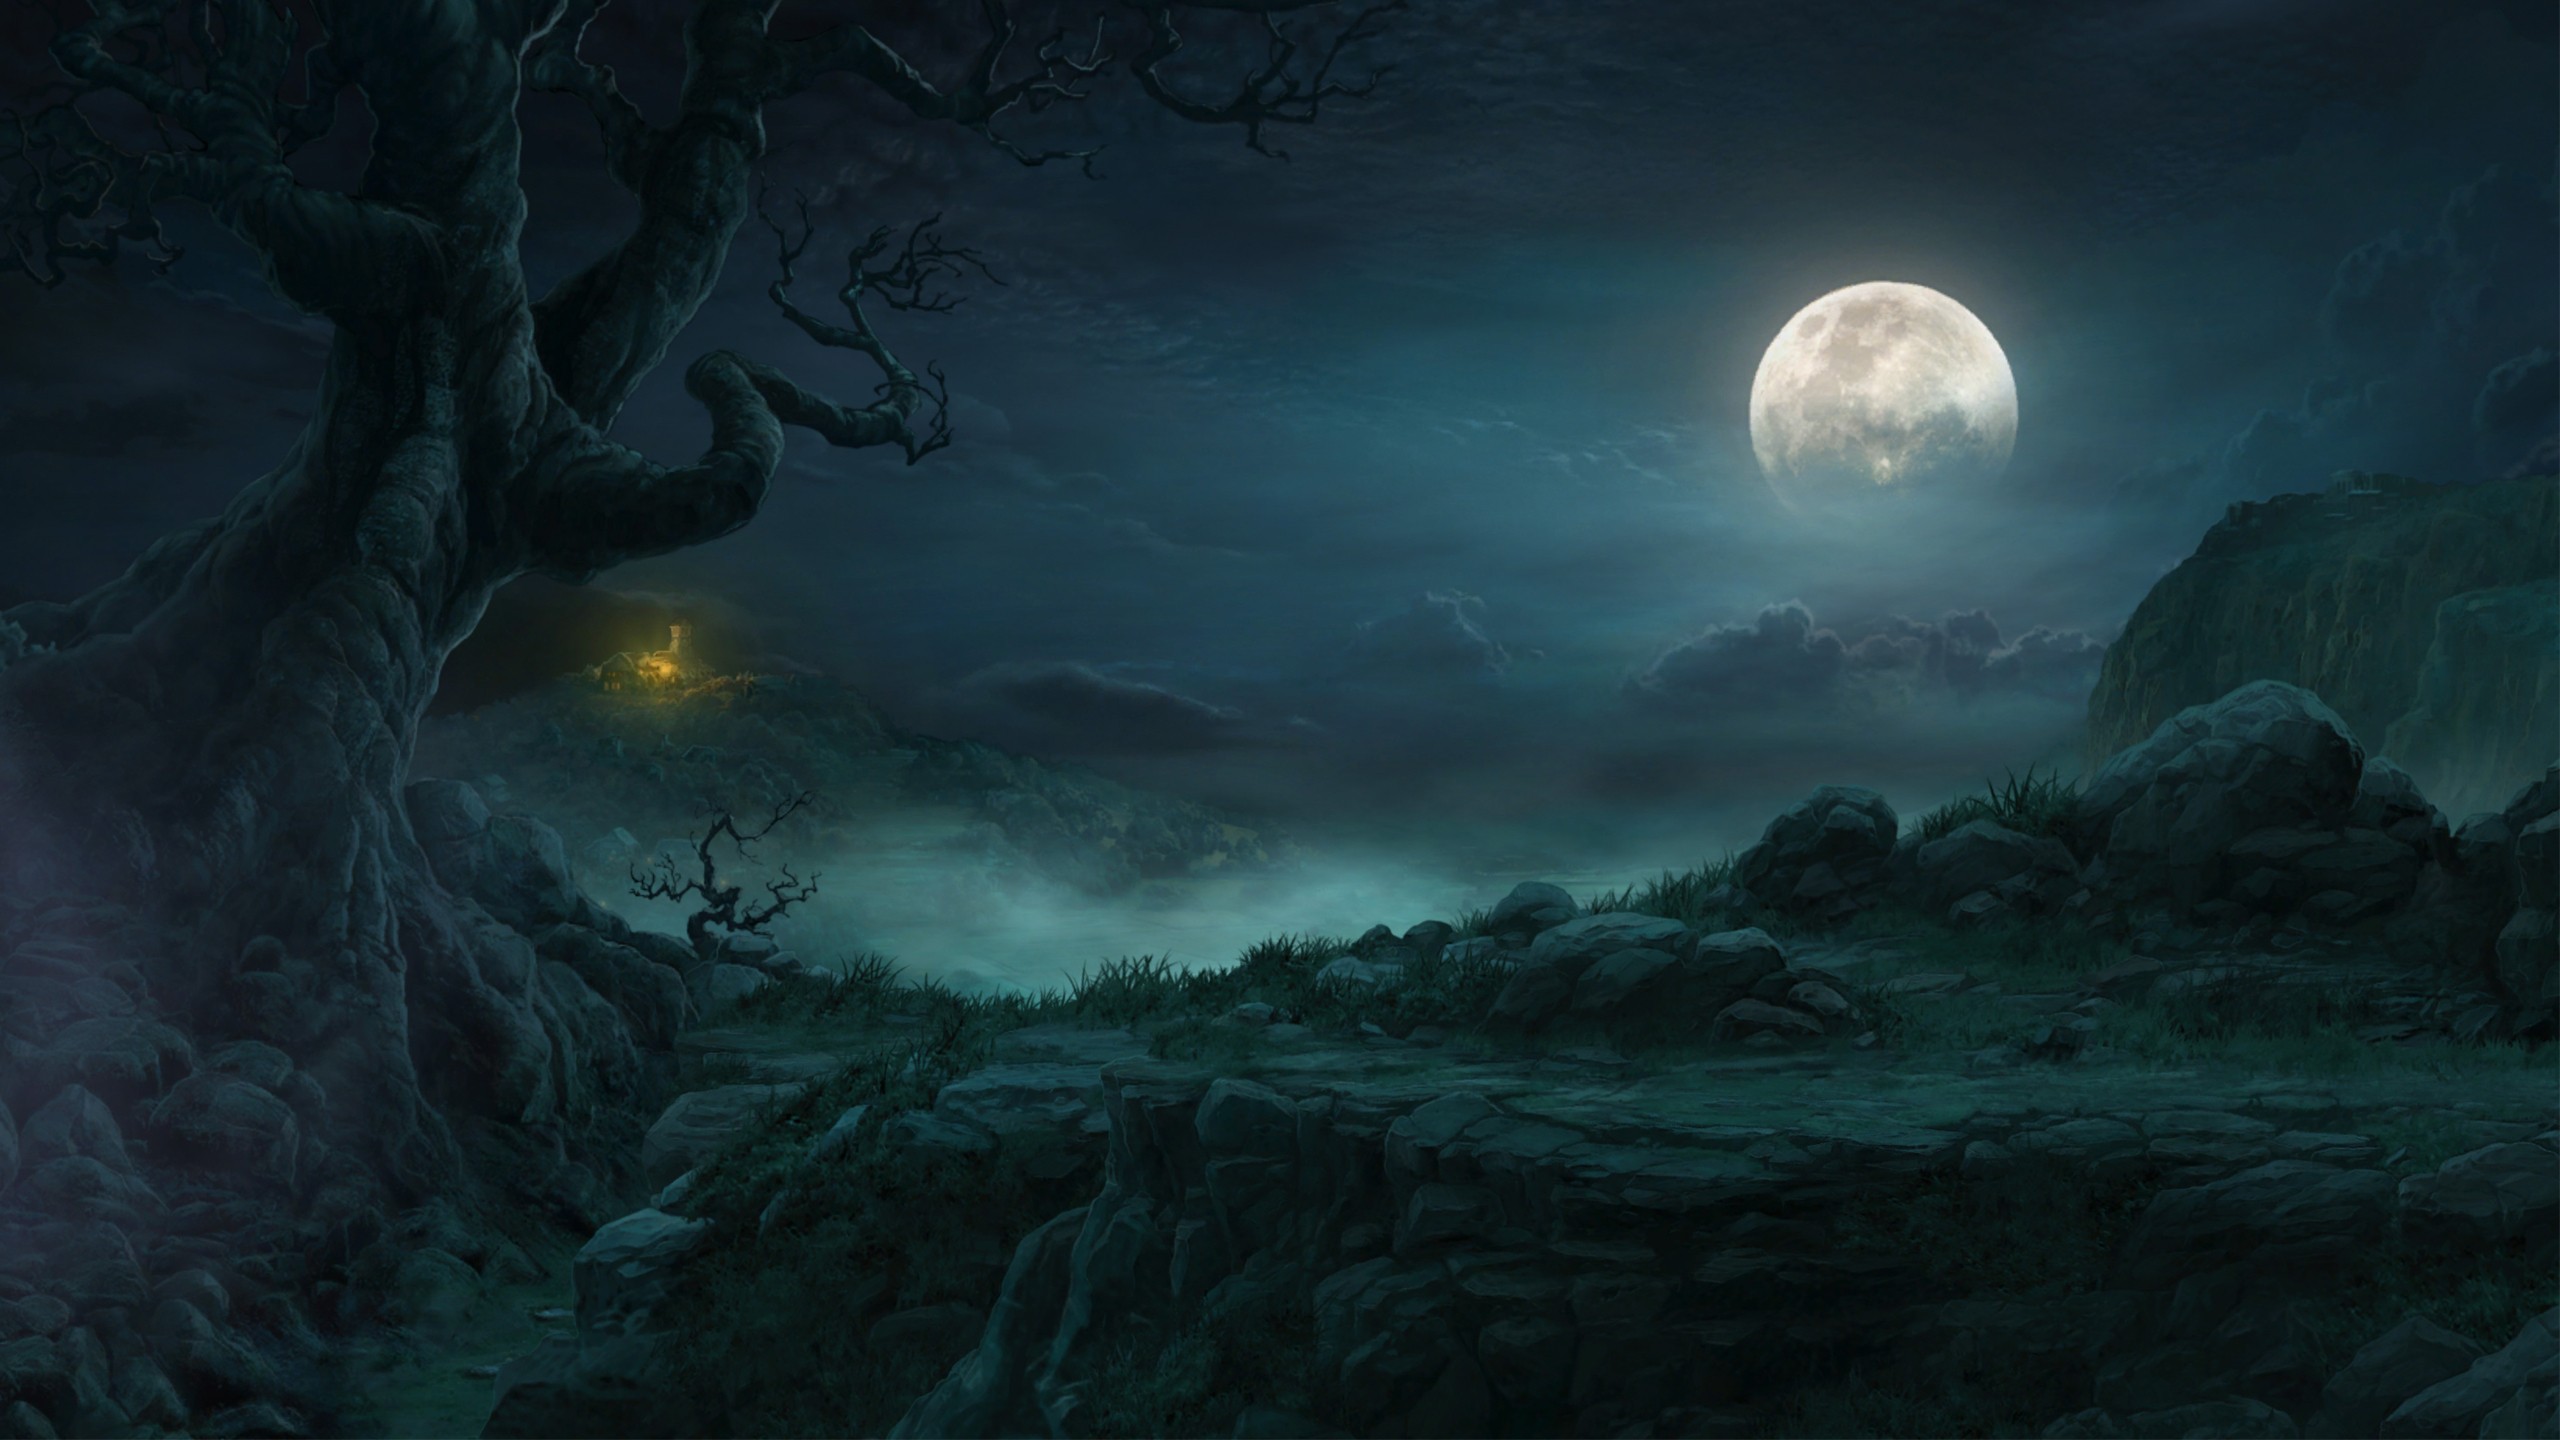 General 2560x1440 Diablo III moonlight video games digital art fantasy art video game art Moon PC gaming Blizzard Entertainment full moon